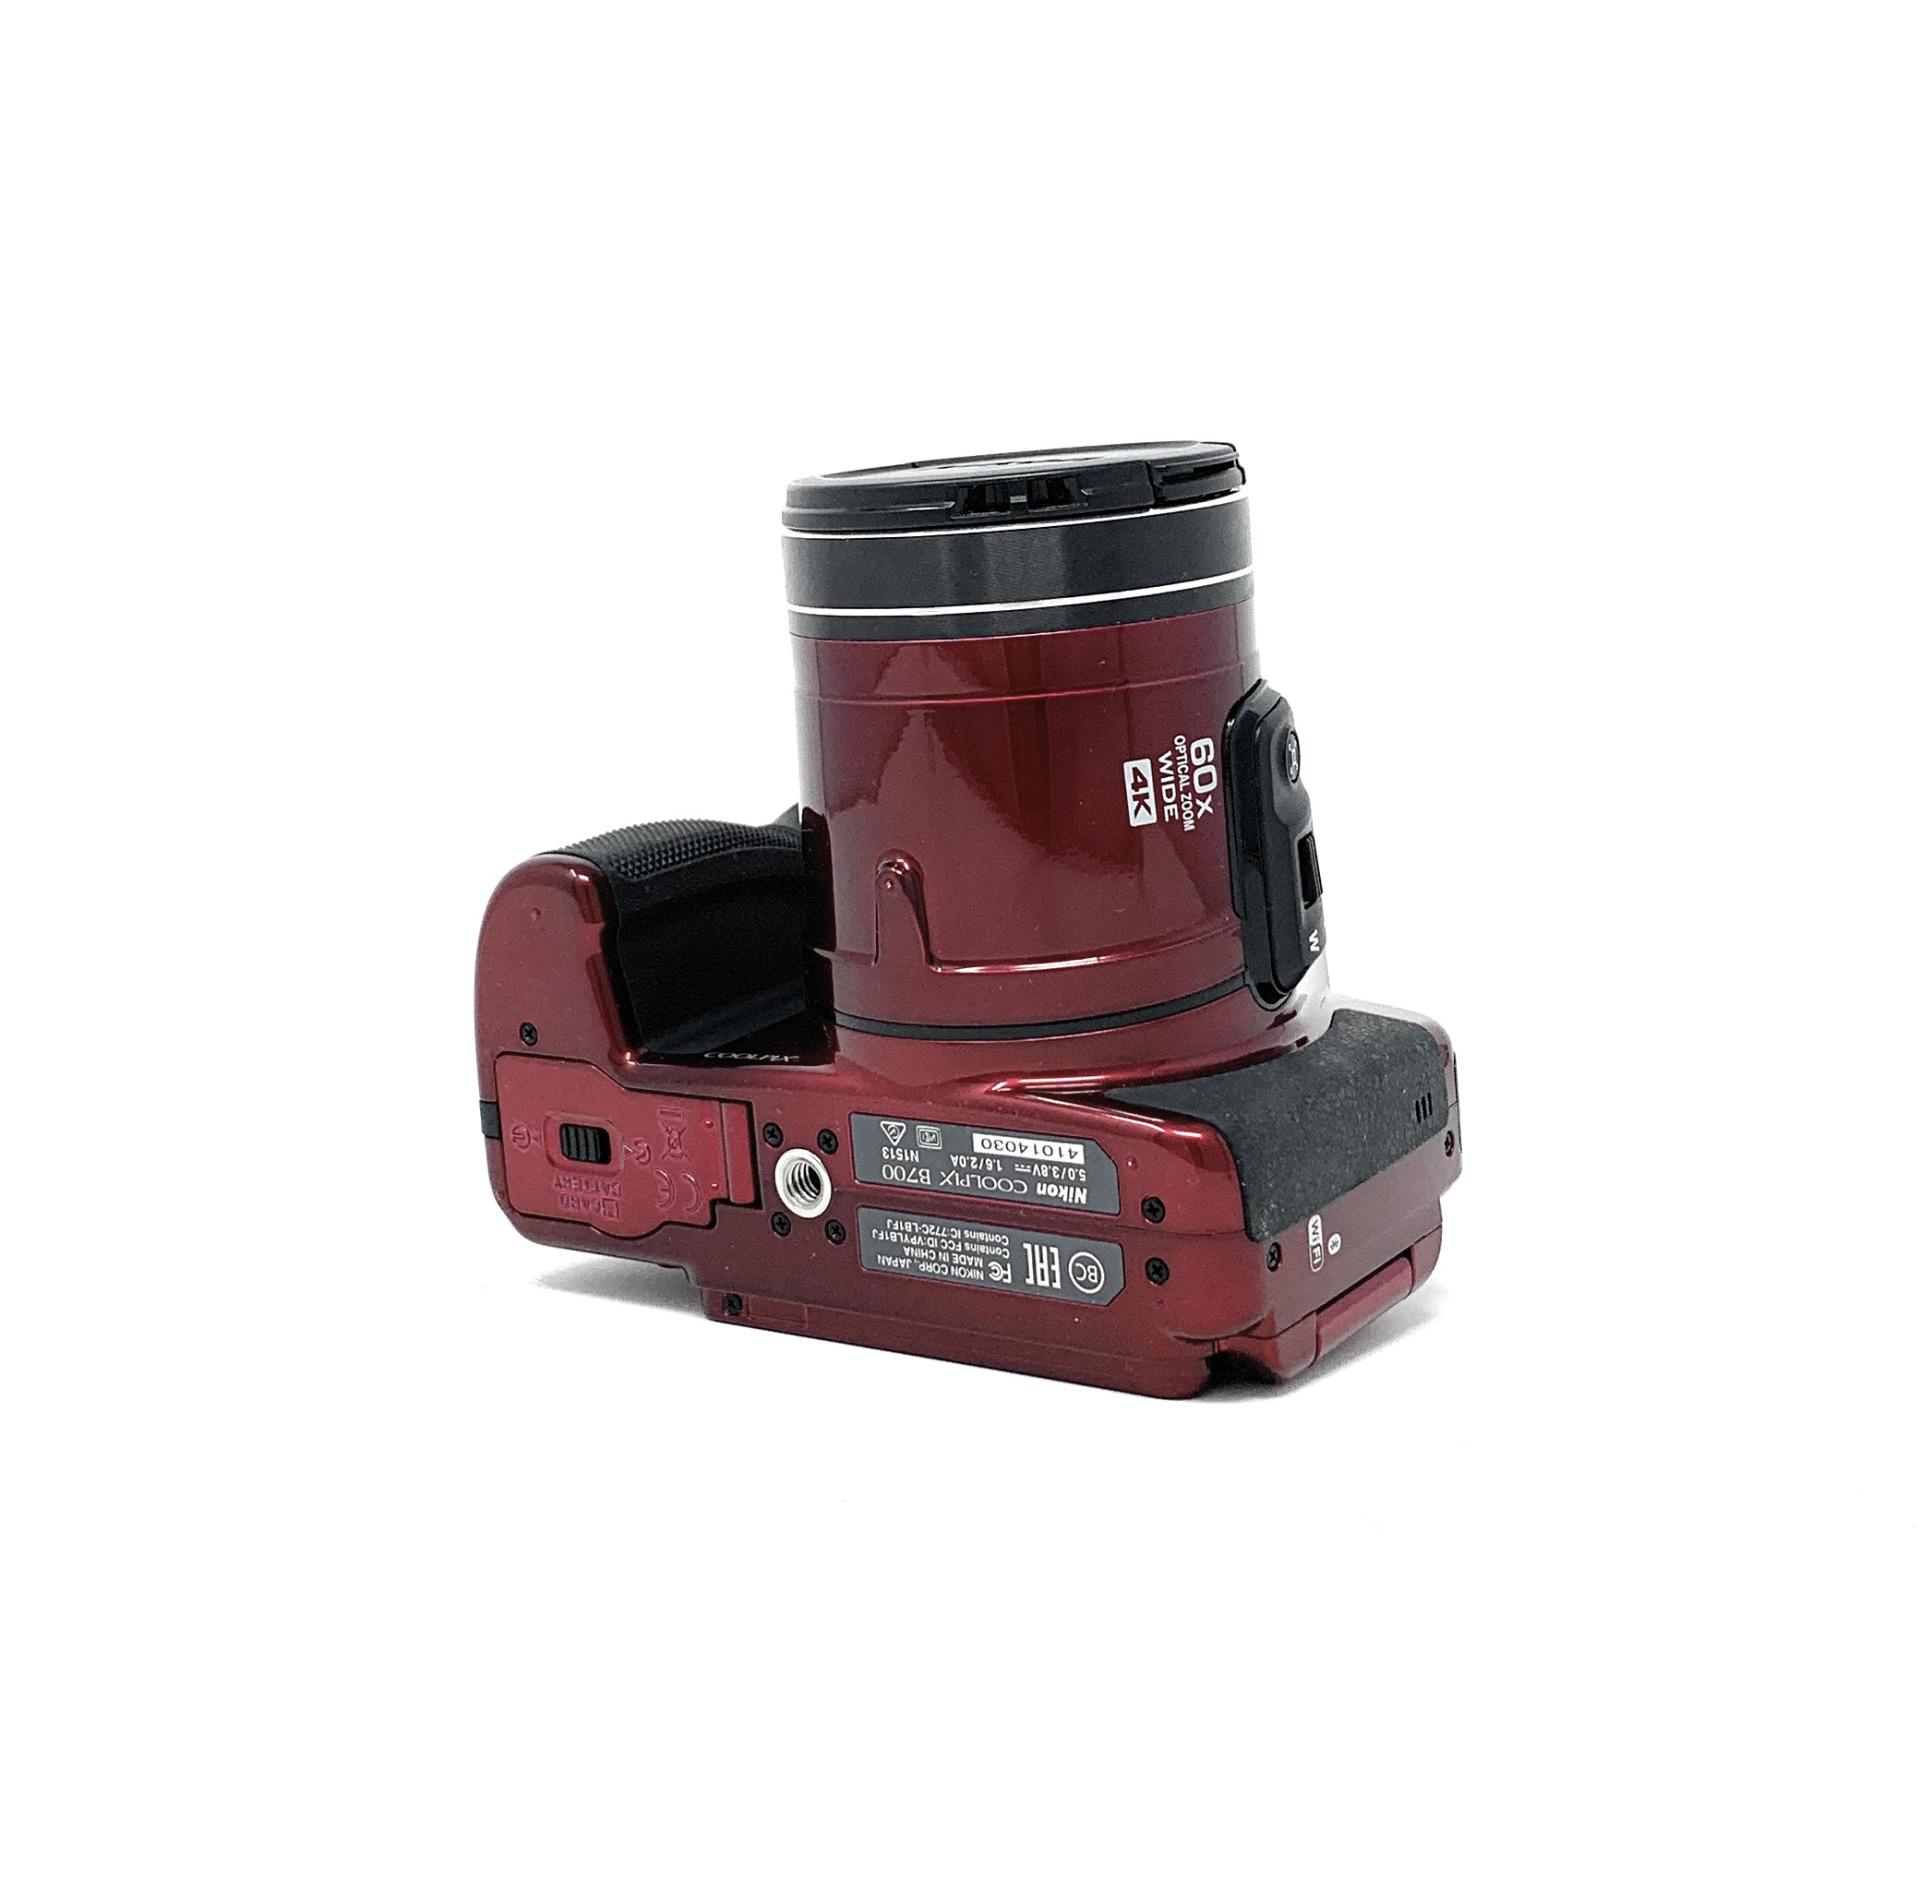 Nikon B700 Coolpix Bridge Camera Red – Buy Any Tech